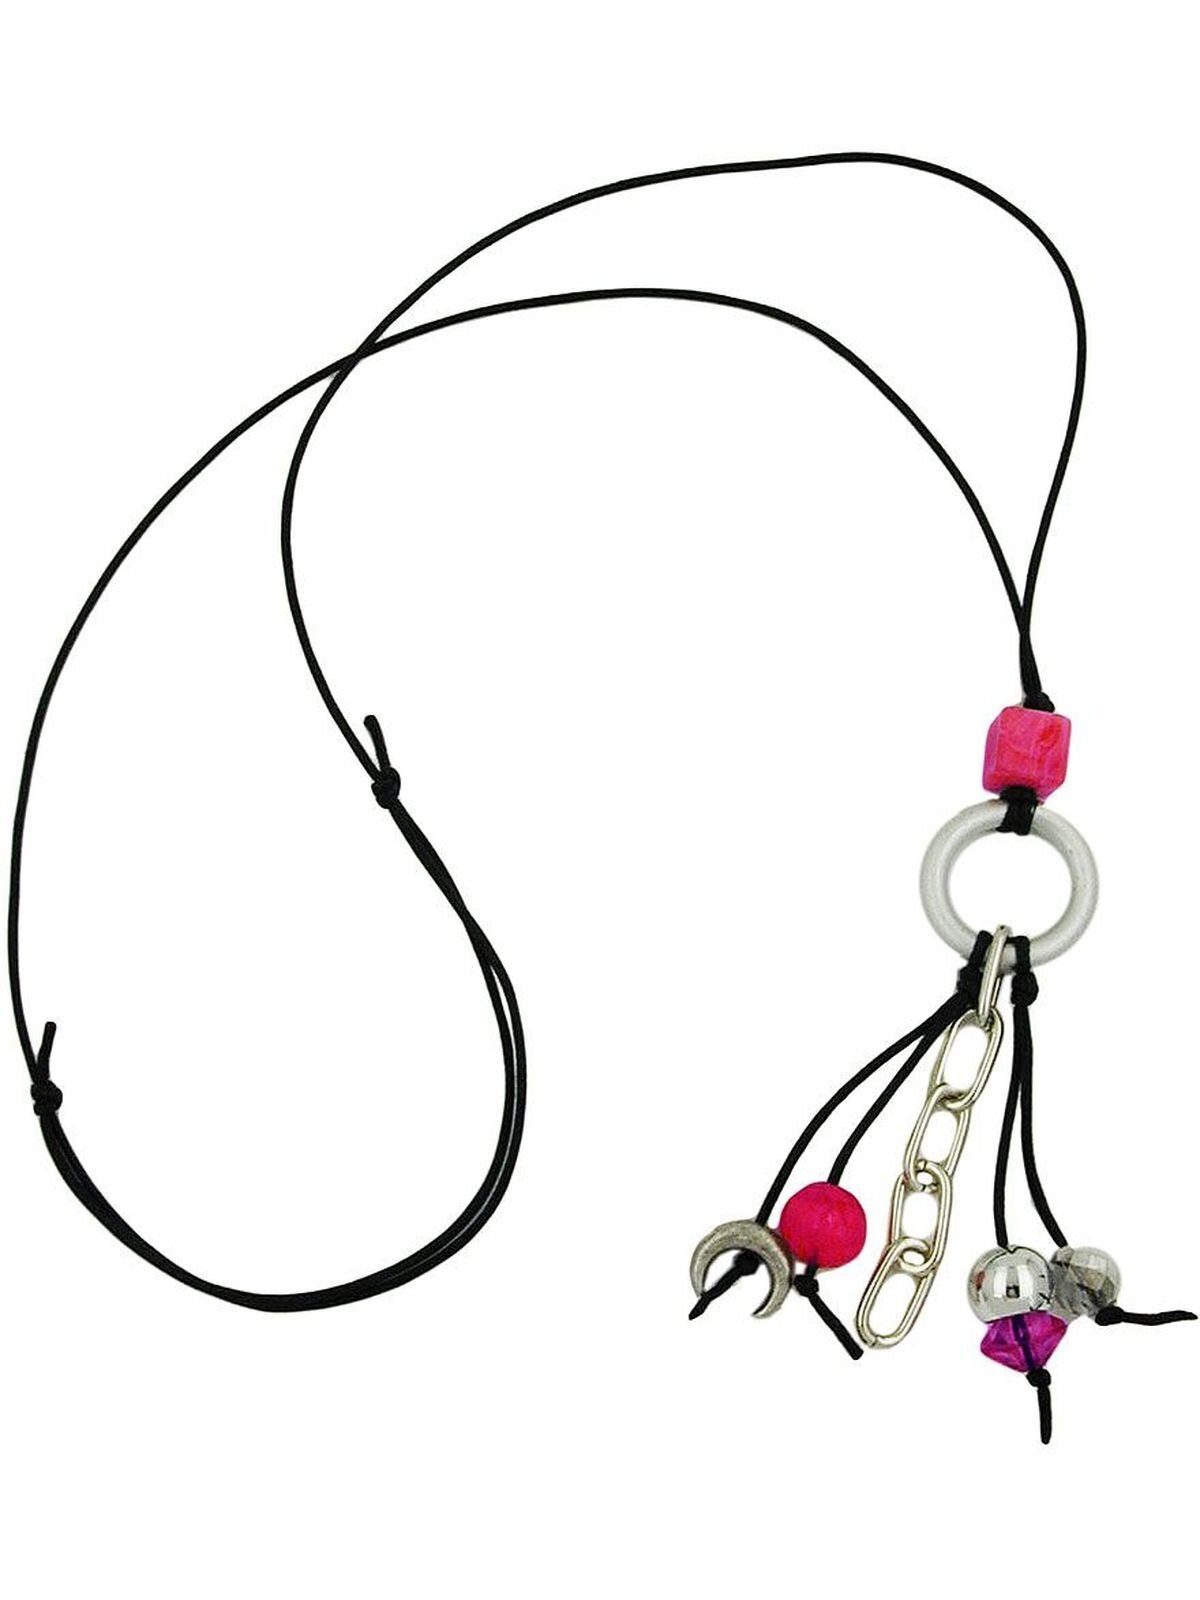 Gallay Perlenkette Ring Aluminium hellgrau Perlen silberfarben pink rosa Kordel schwarz 80cm